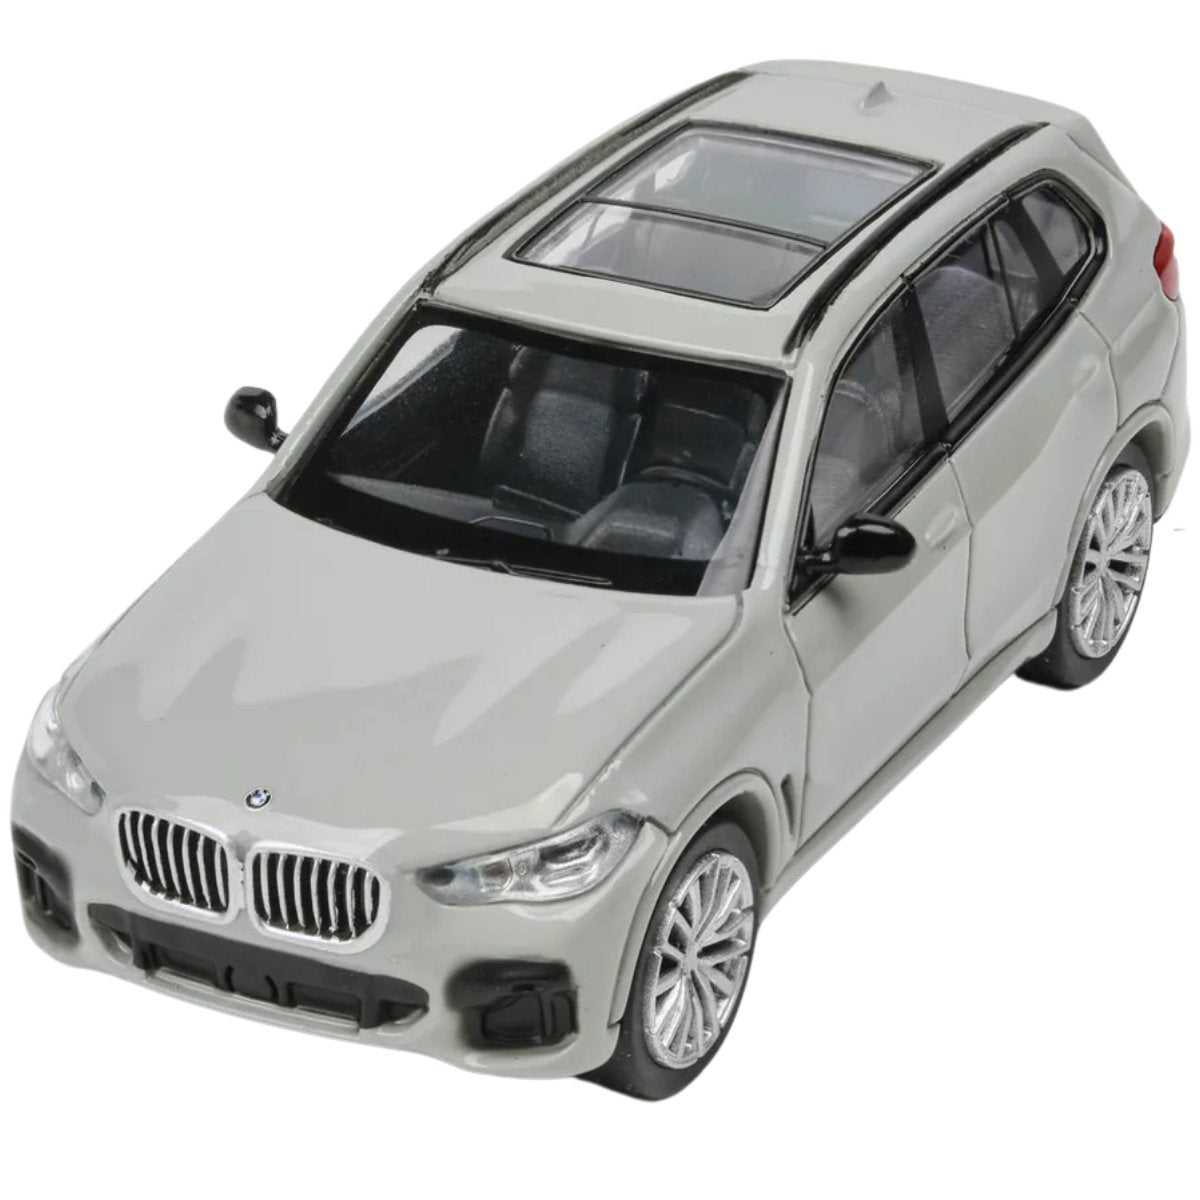 Para64 BMW X5 Nardo Grey LHD - Phillips Hobbies